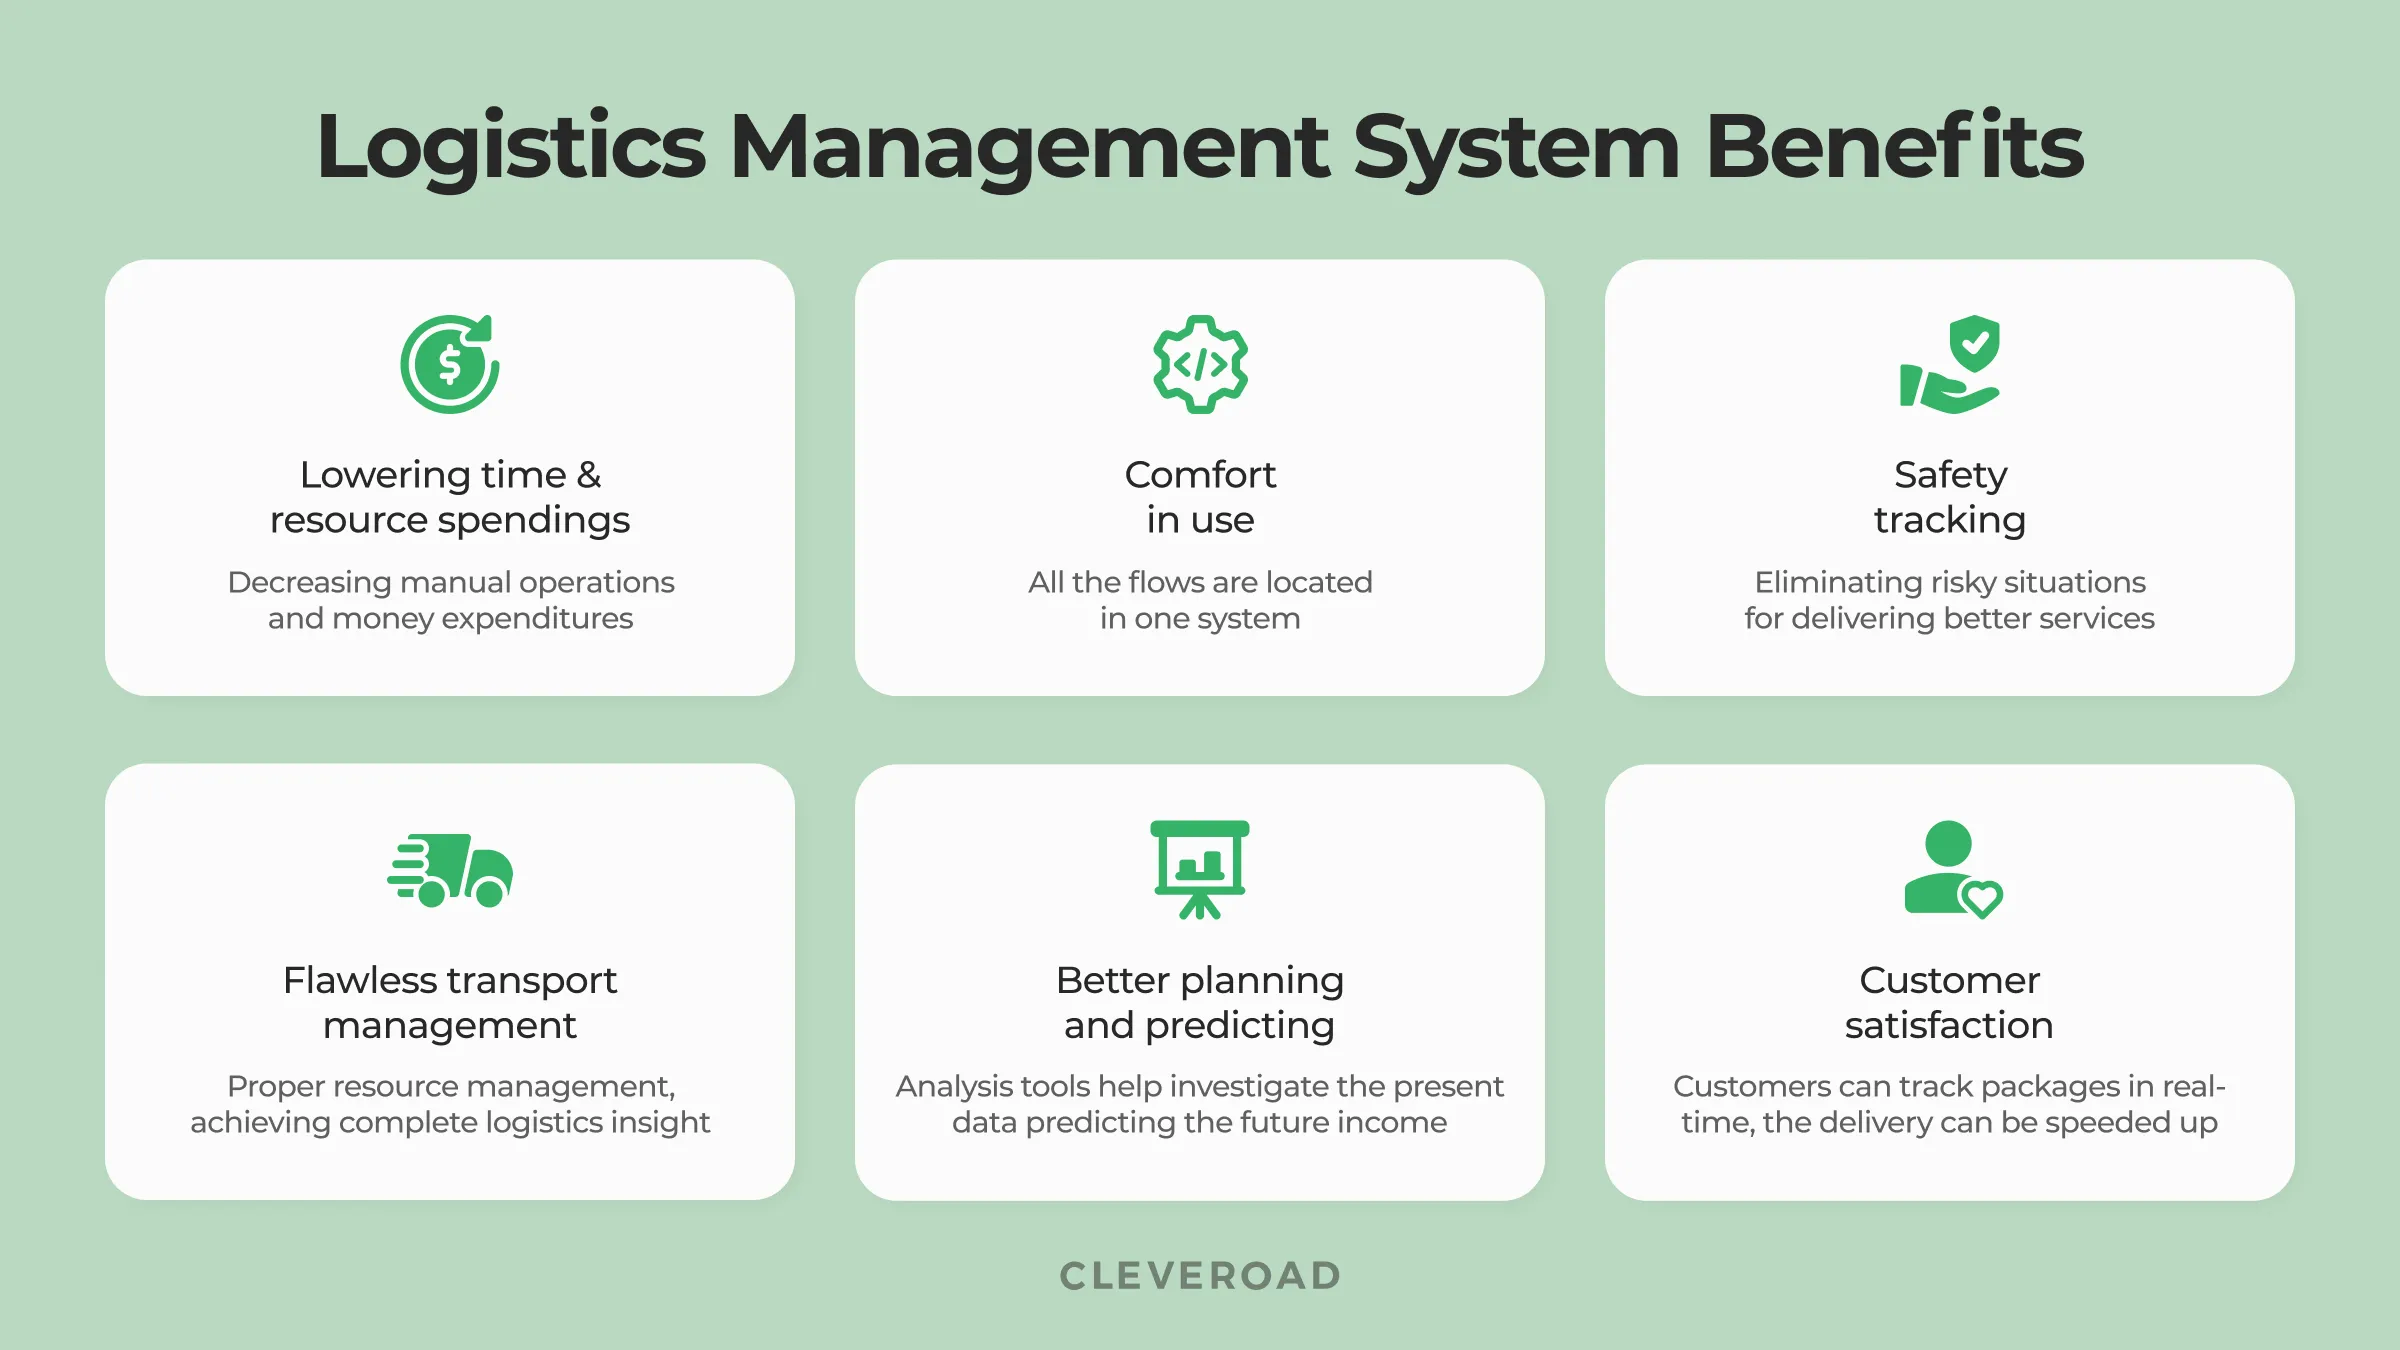 Logistics management system benefits